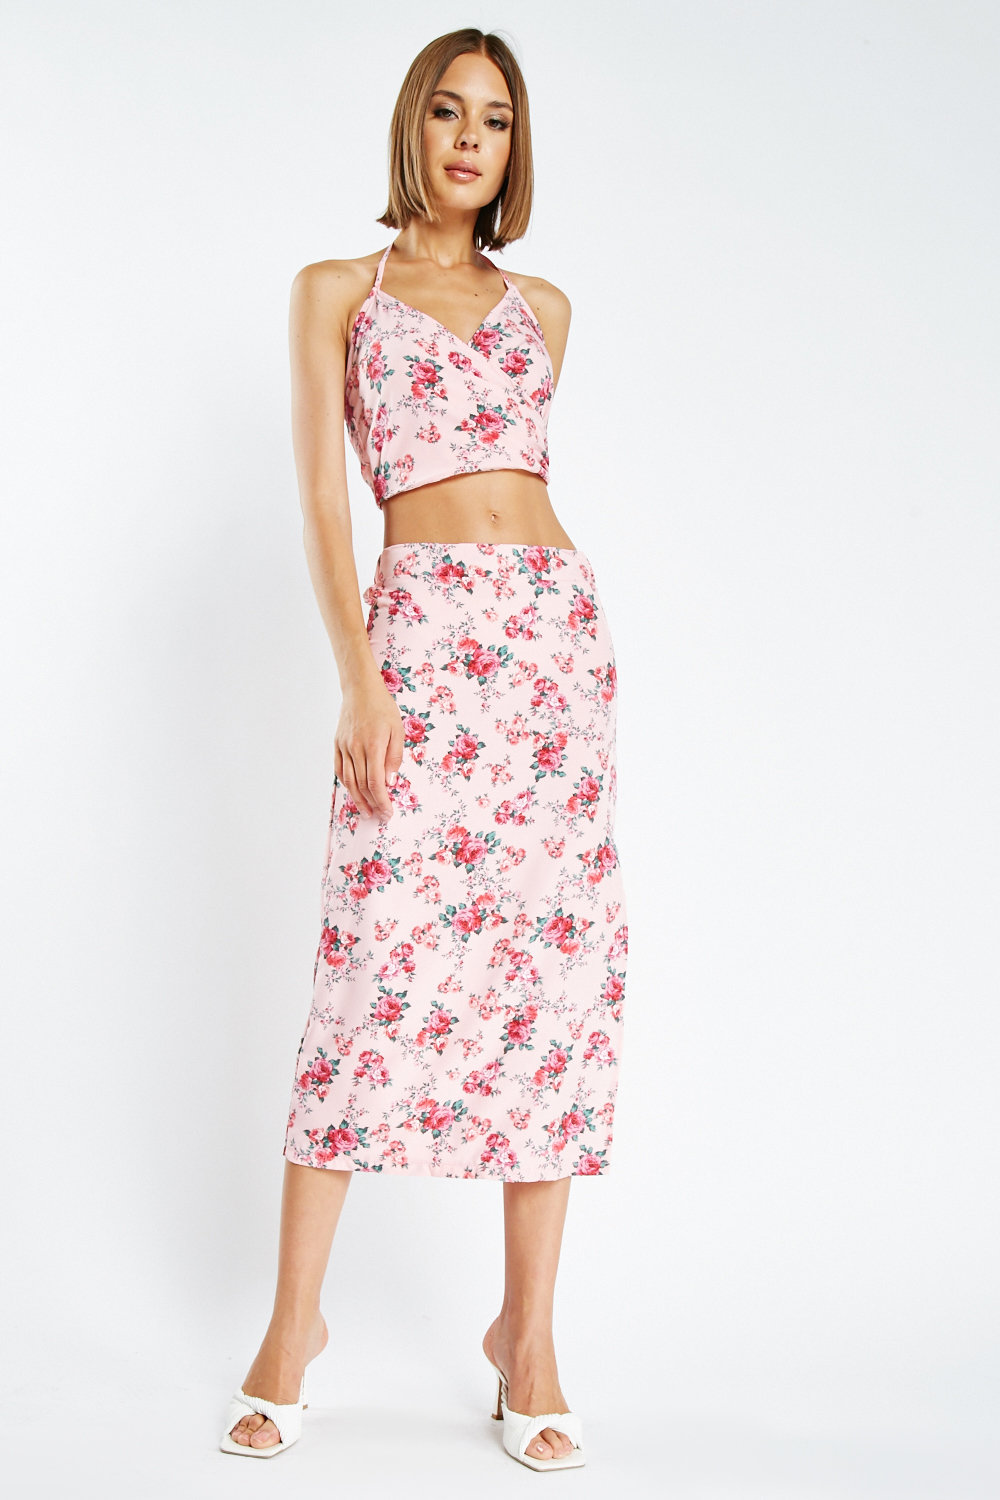 Rose Print Top And Skirt Set